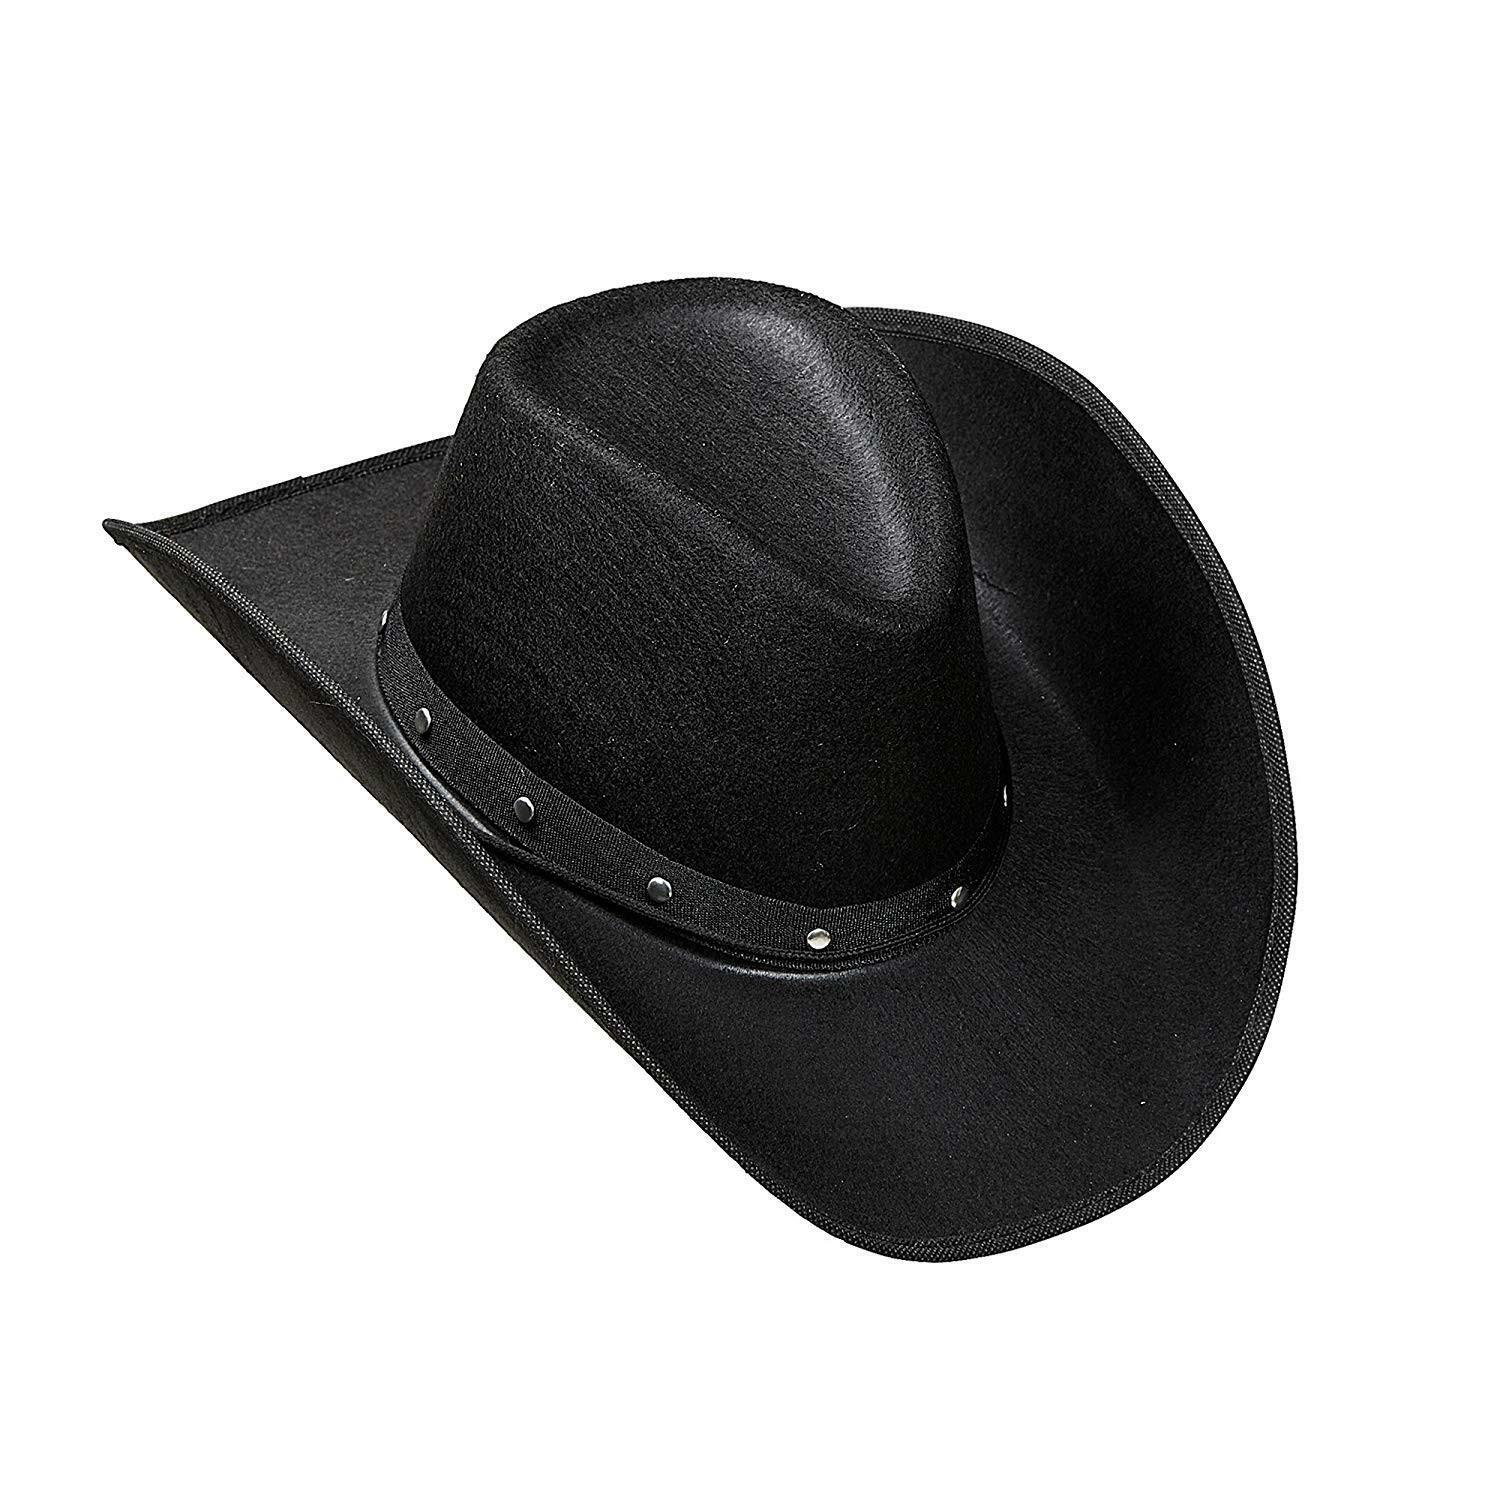 widmann widmann cappello cowboy nero - taglia unica